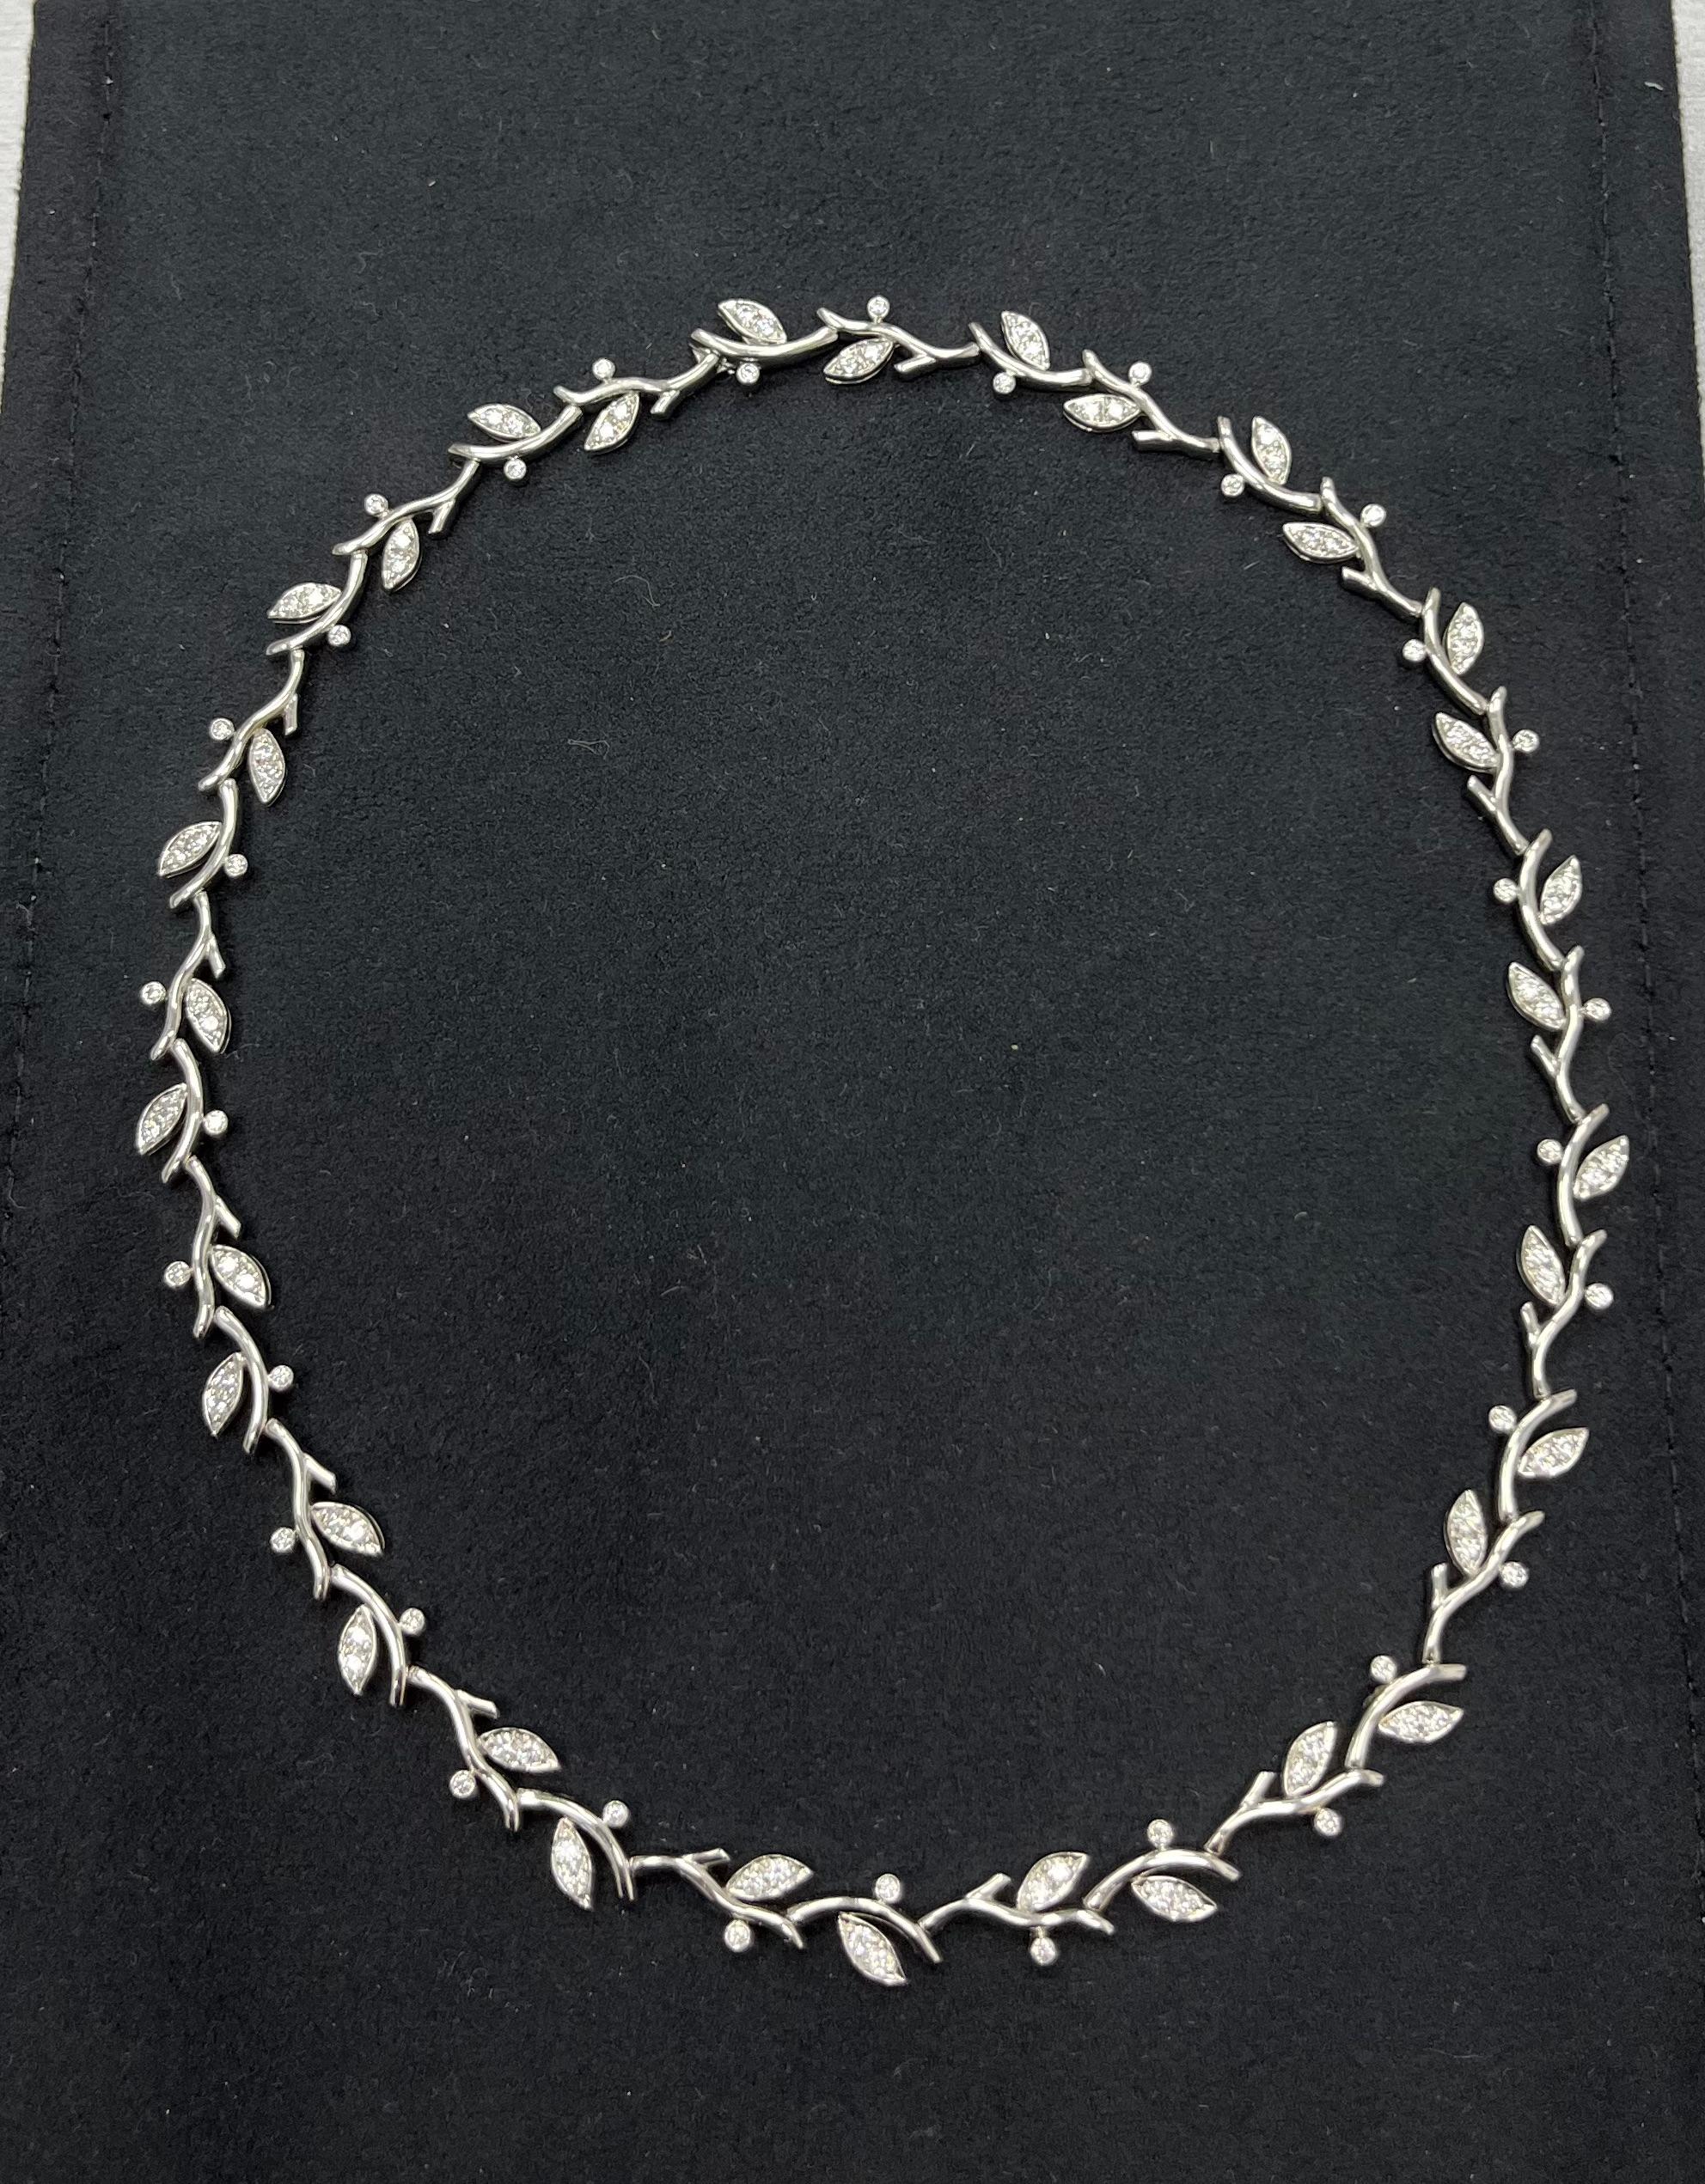 tiffany vine necklace